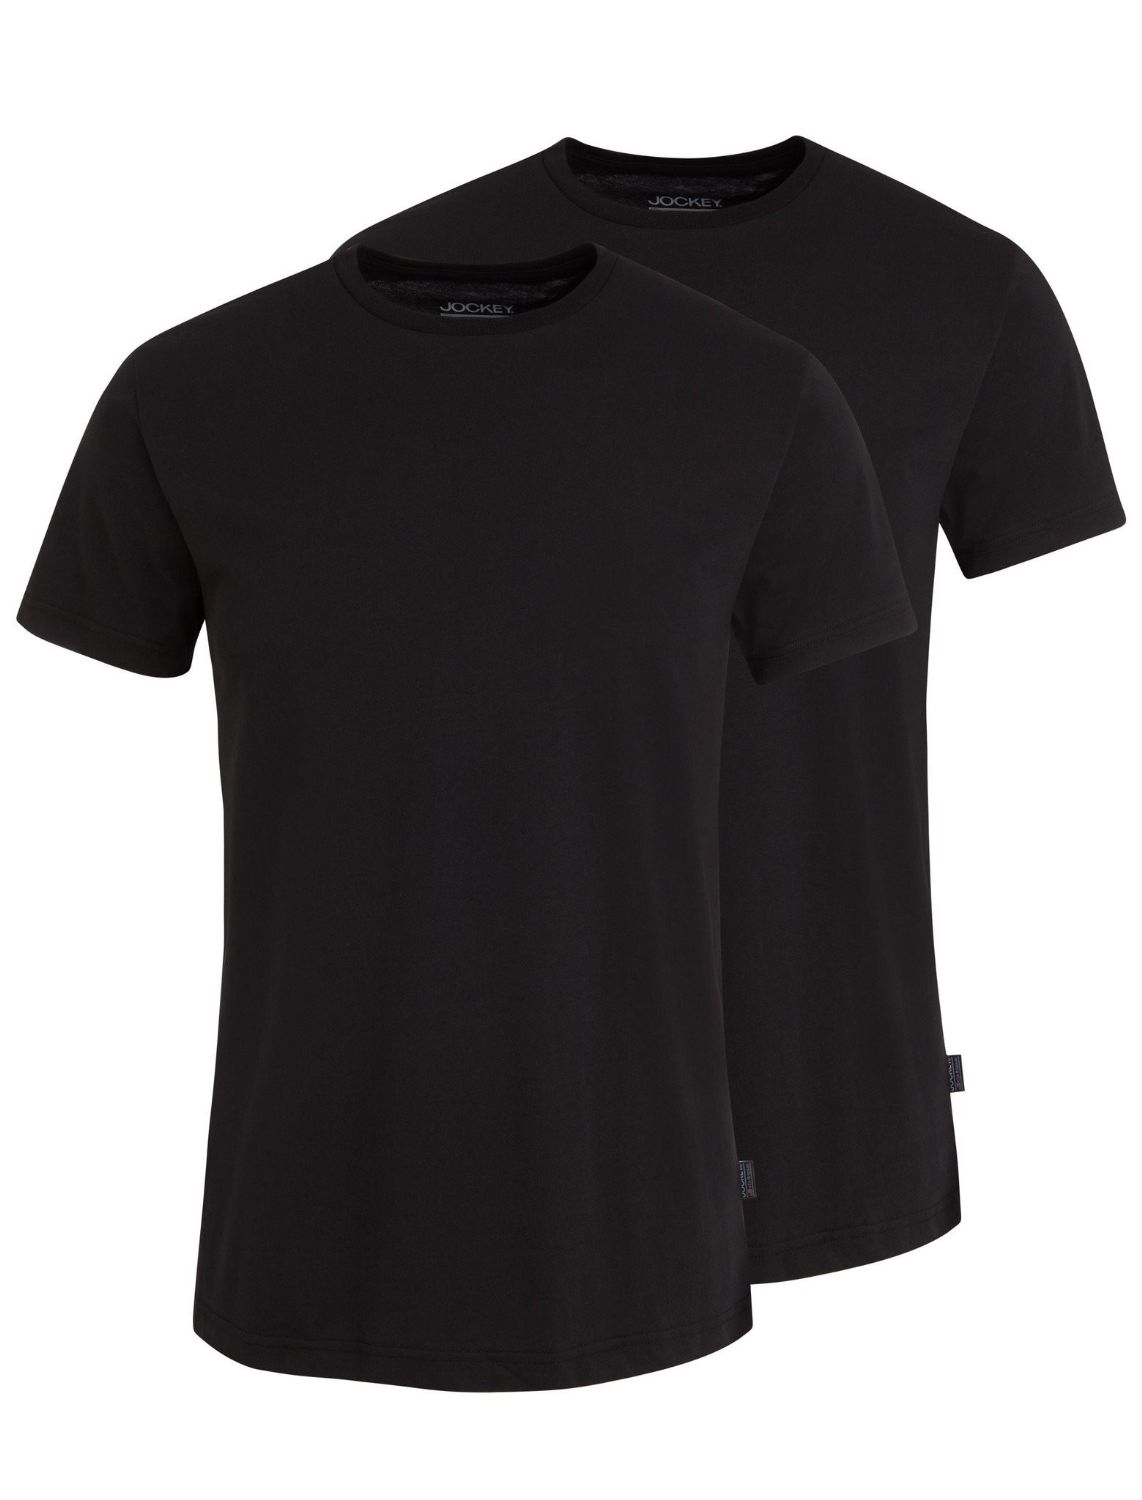 Jockey T Shirt 2 Pack 120120999 Black size XL